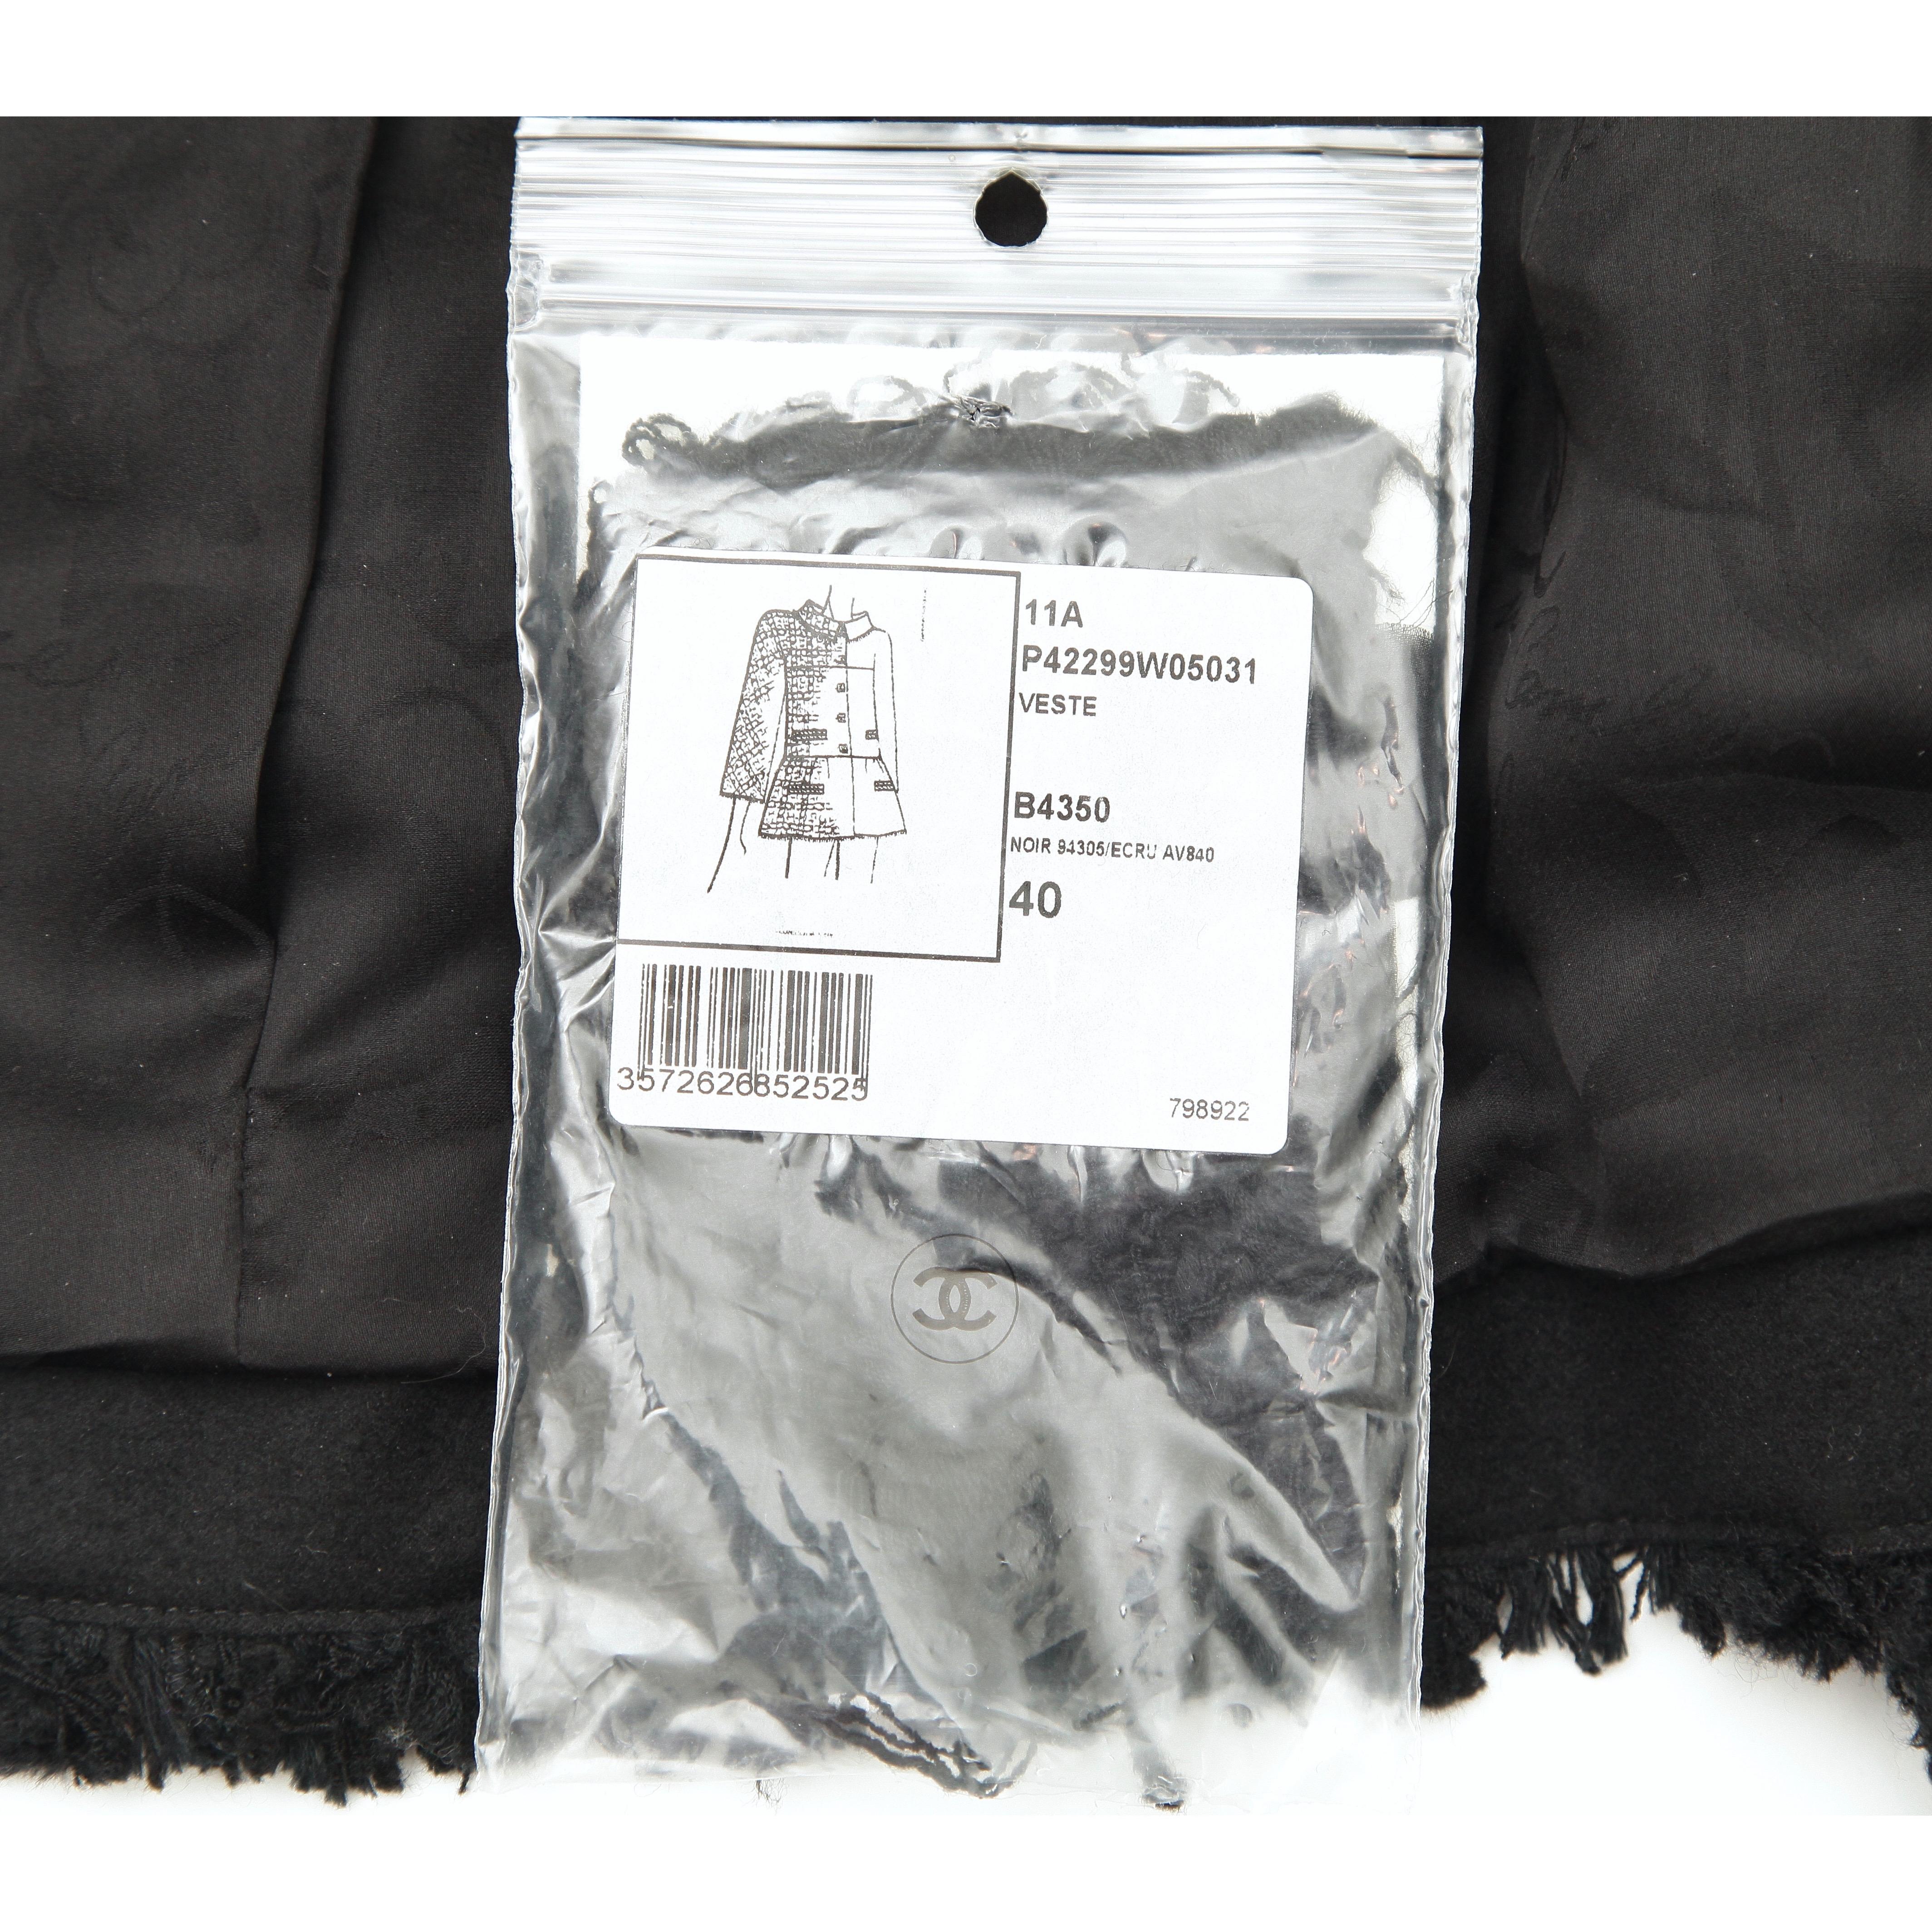 CHANEL Tweed Black Jacket Blazer Buttons Long Sleeve Pockets Sz 40 2011 11A 7